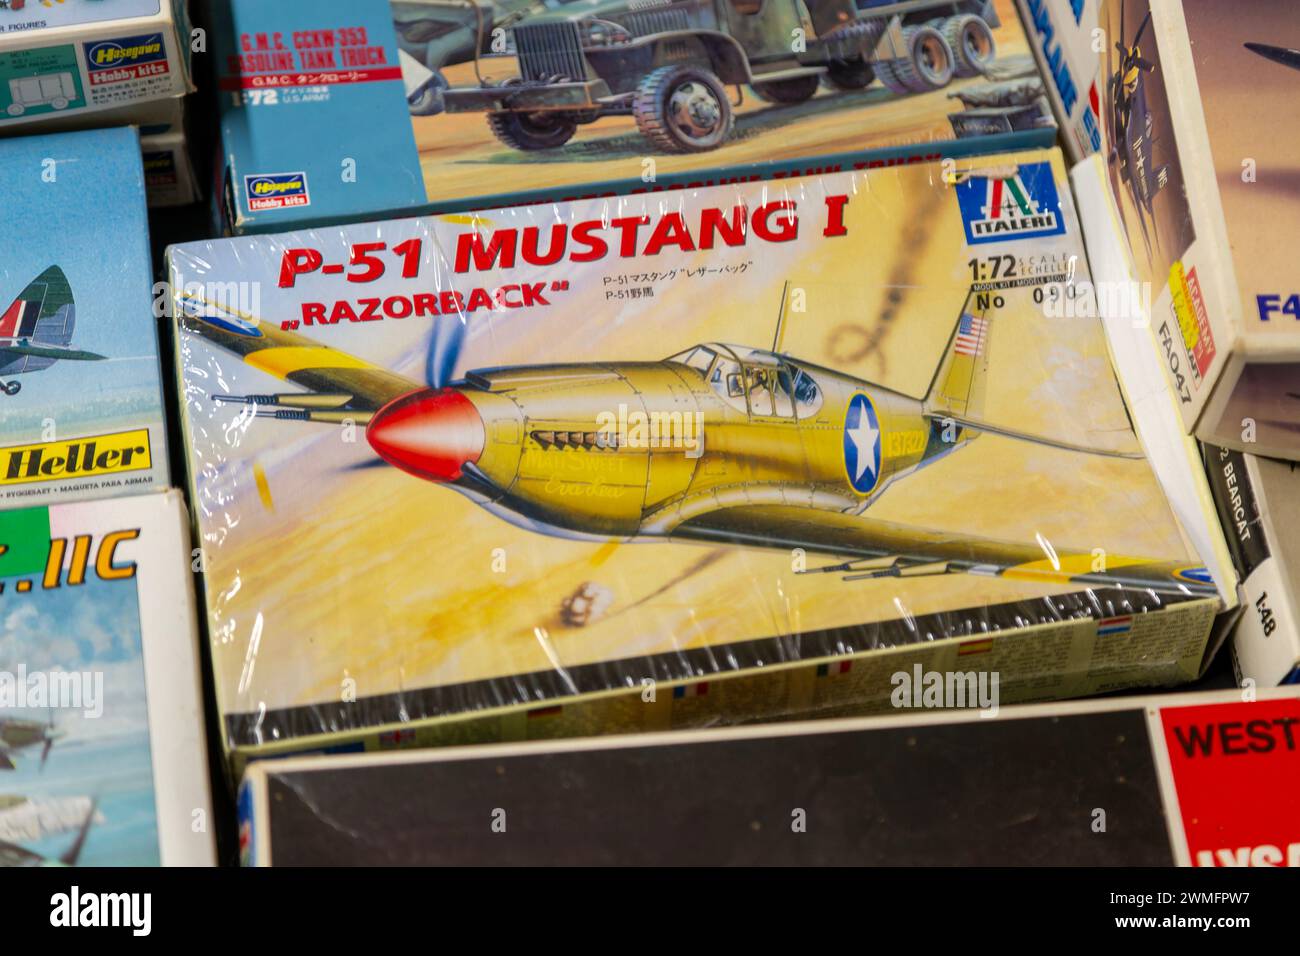 Boxed model plane kit on display at auction, UK P-51 Mustang 1 'Razorback' Stock Photo